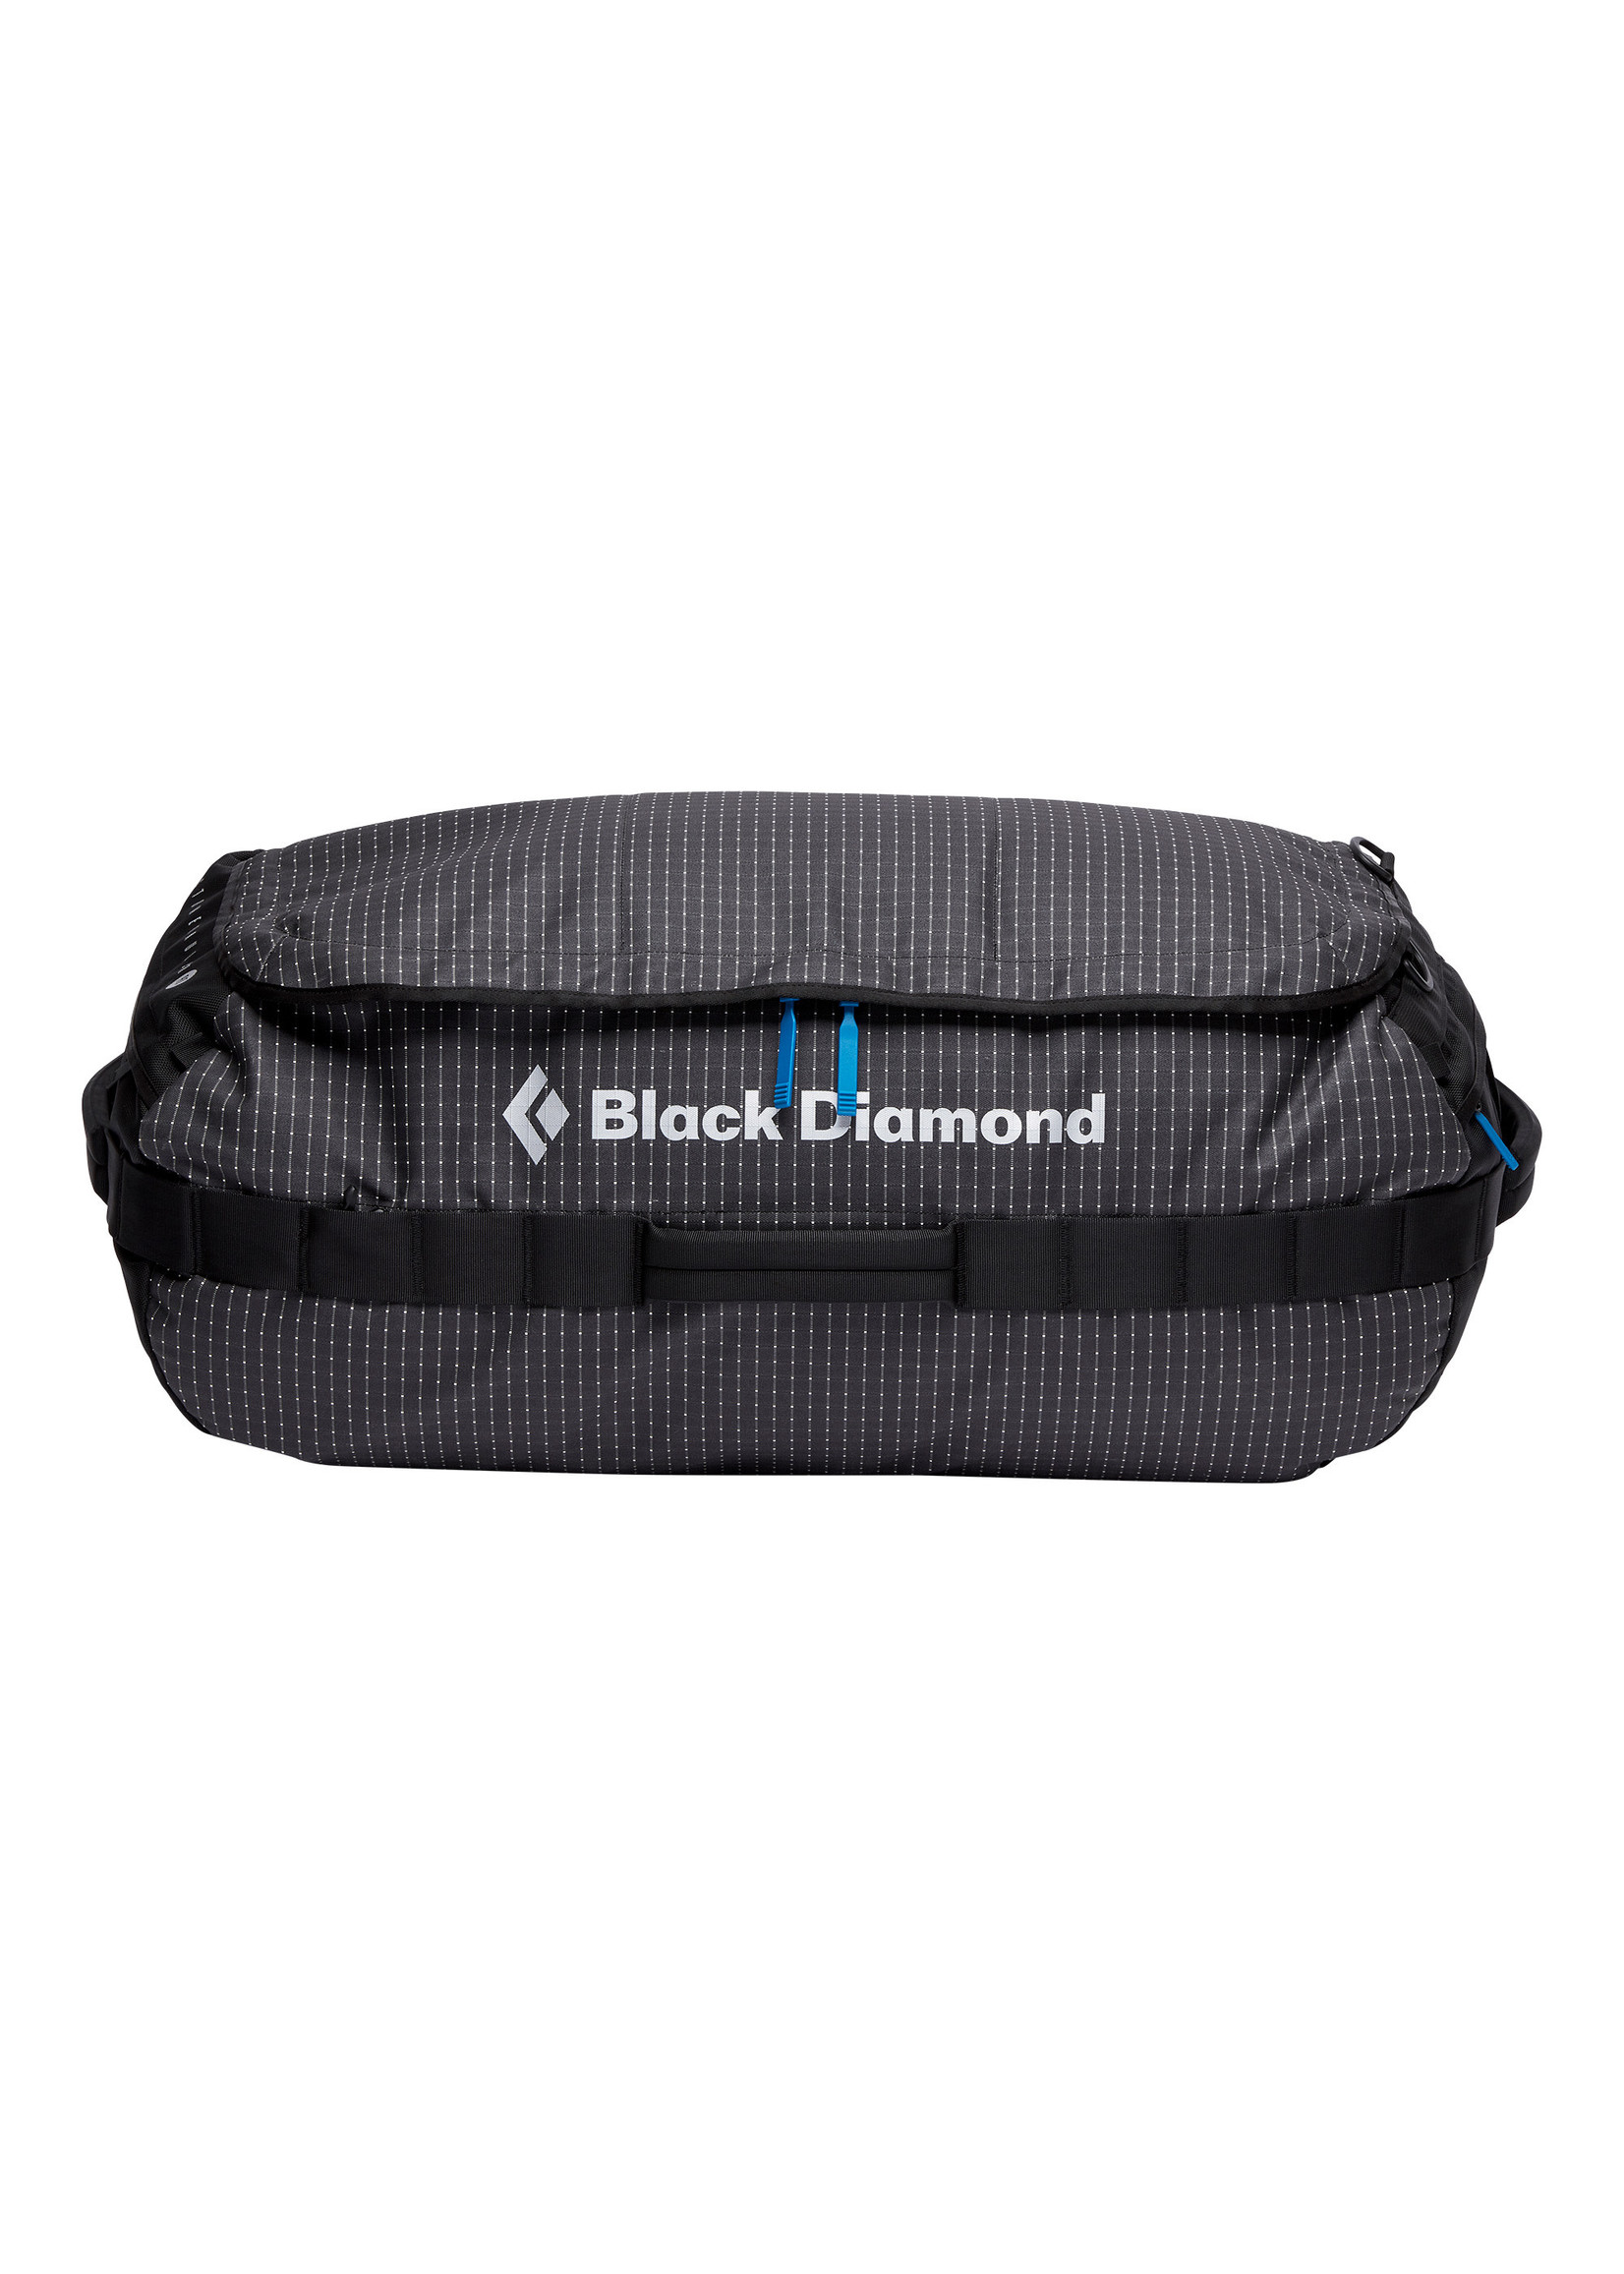 Black Diamond Sac fourre-tout Black Diamond Stonehauler 90 L